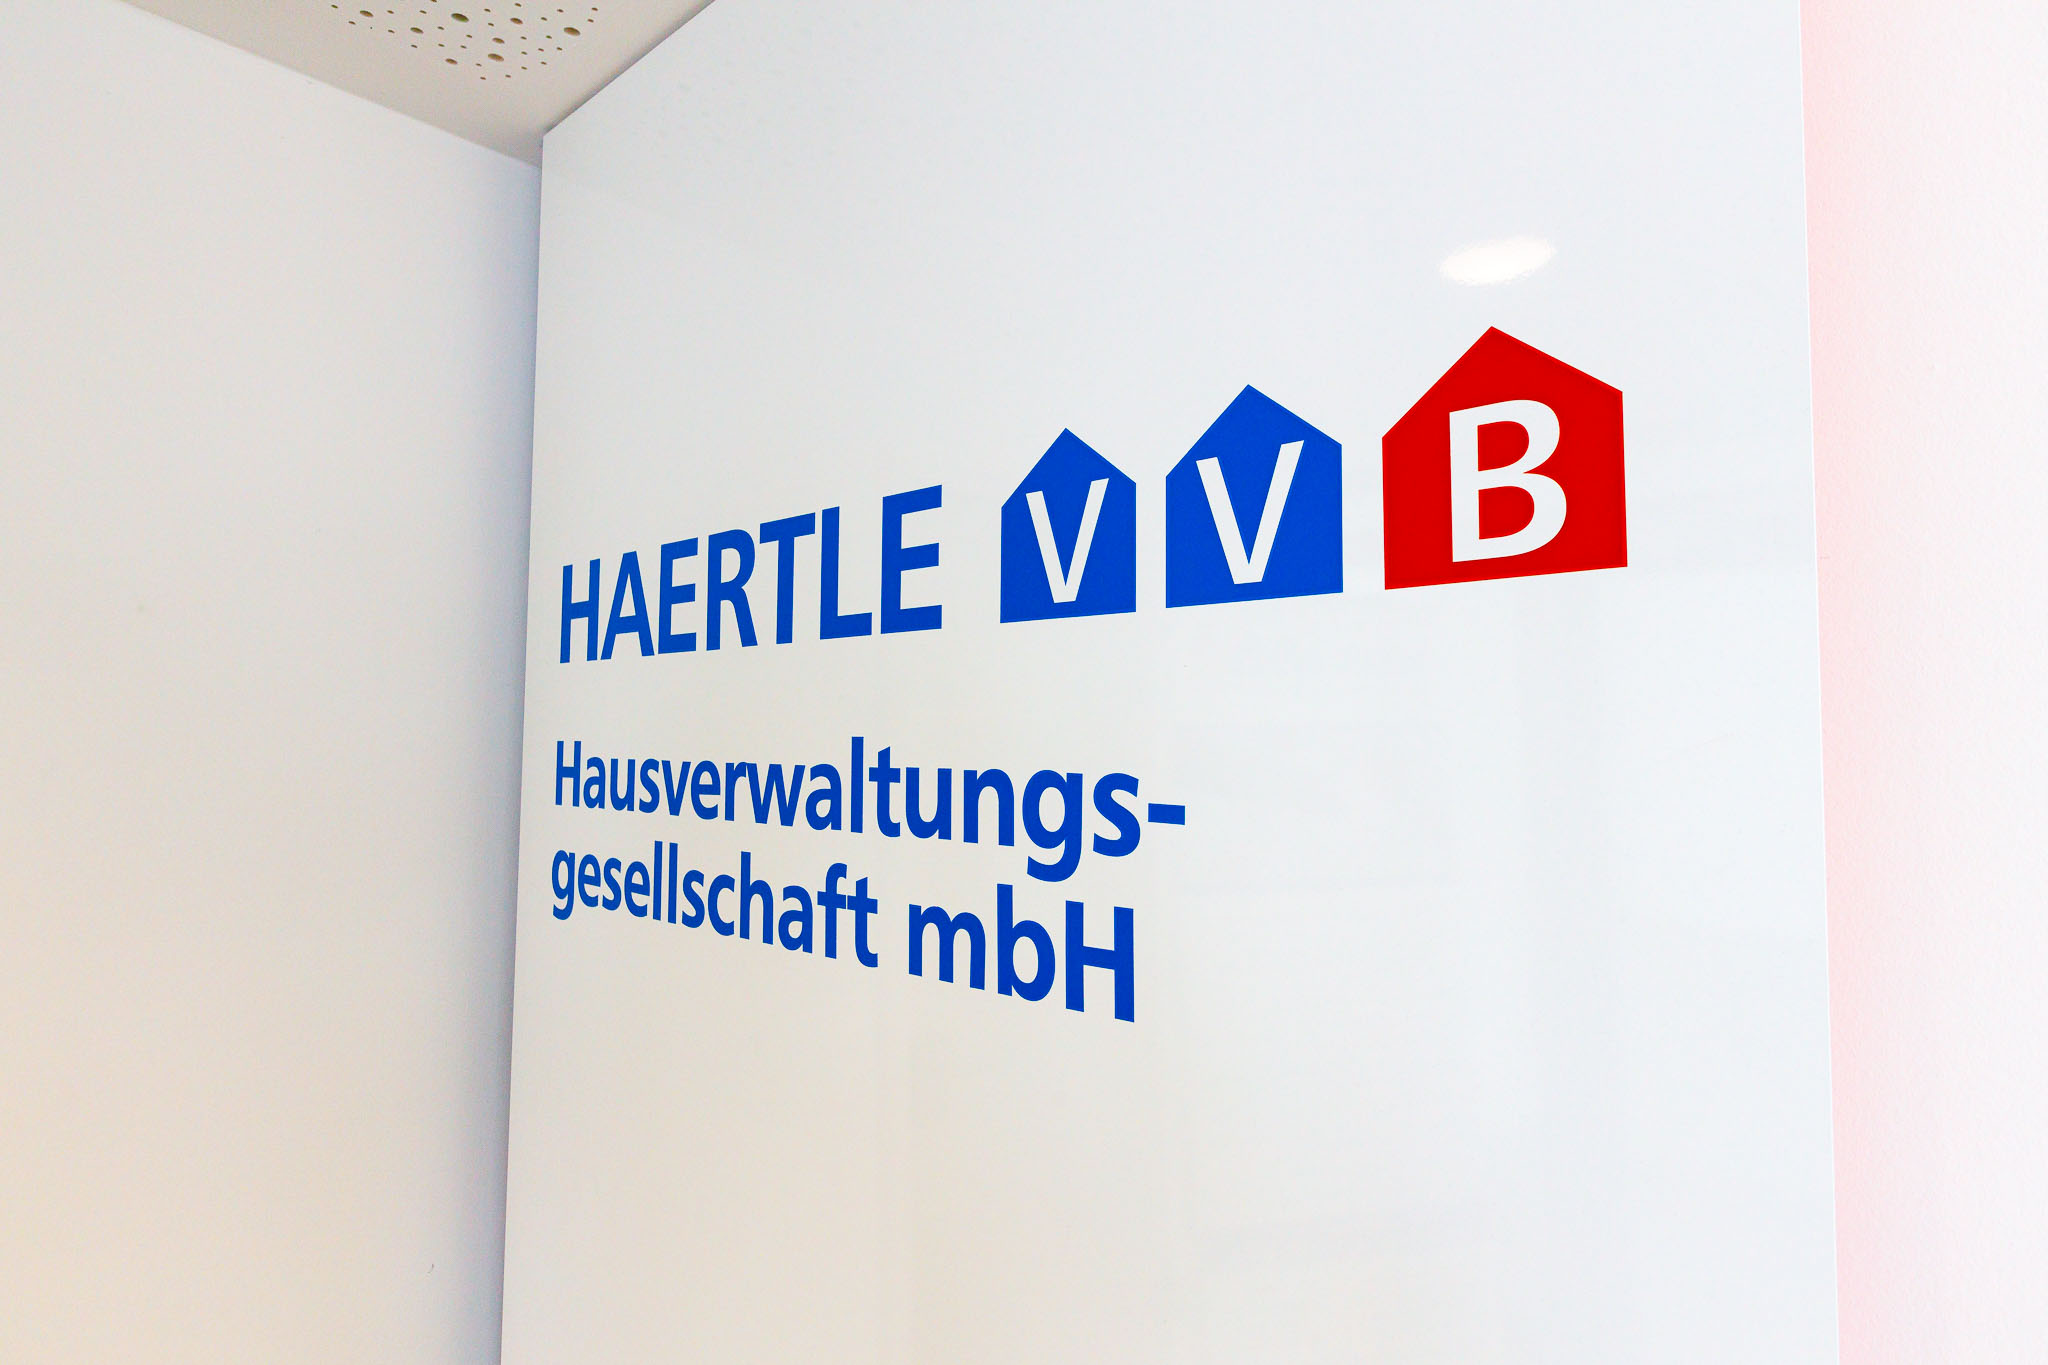 Logo Haertle VVB Hausverwaltungsgesellschaft mbH